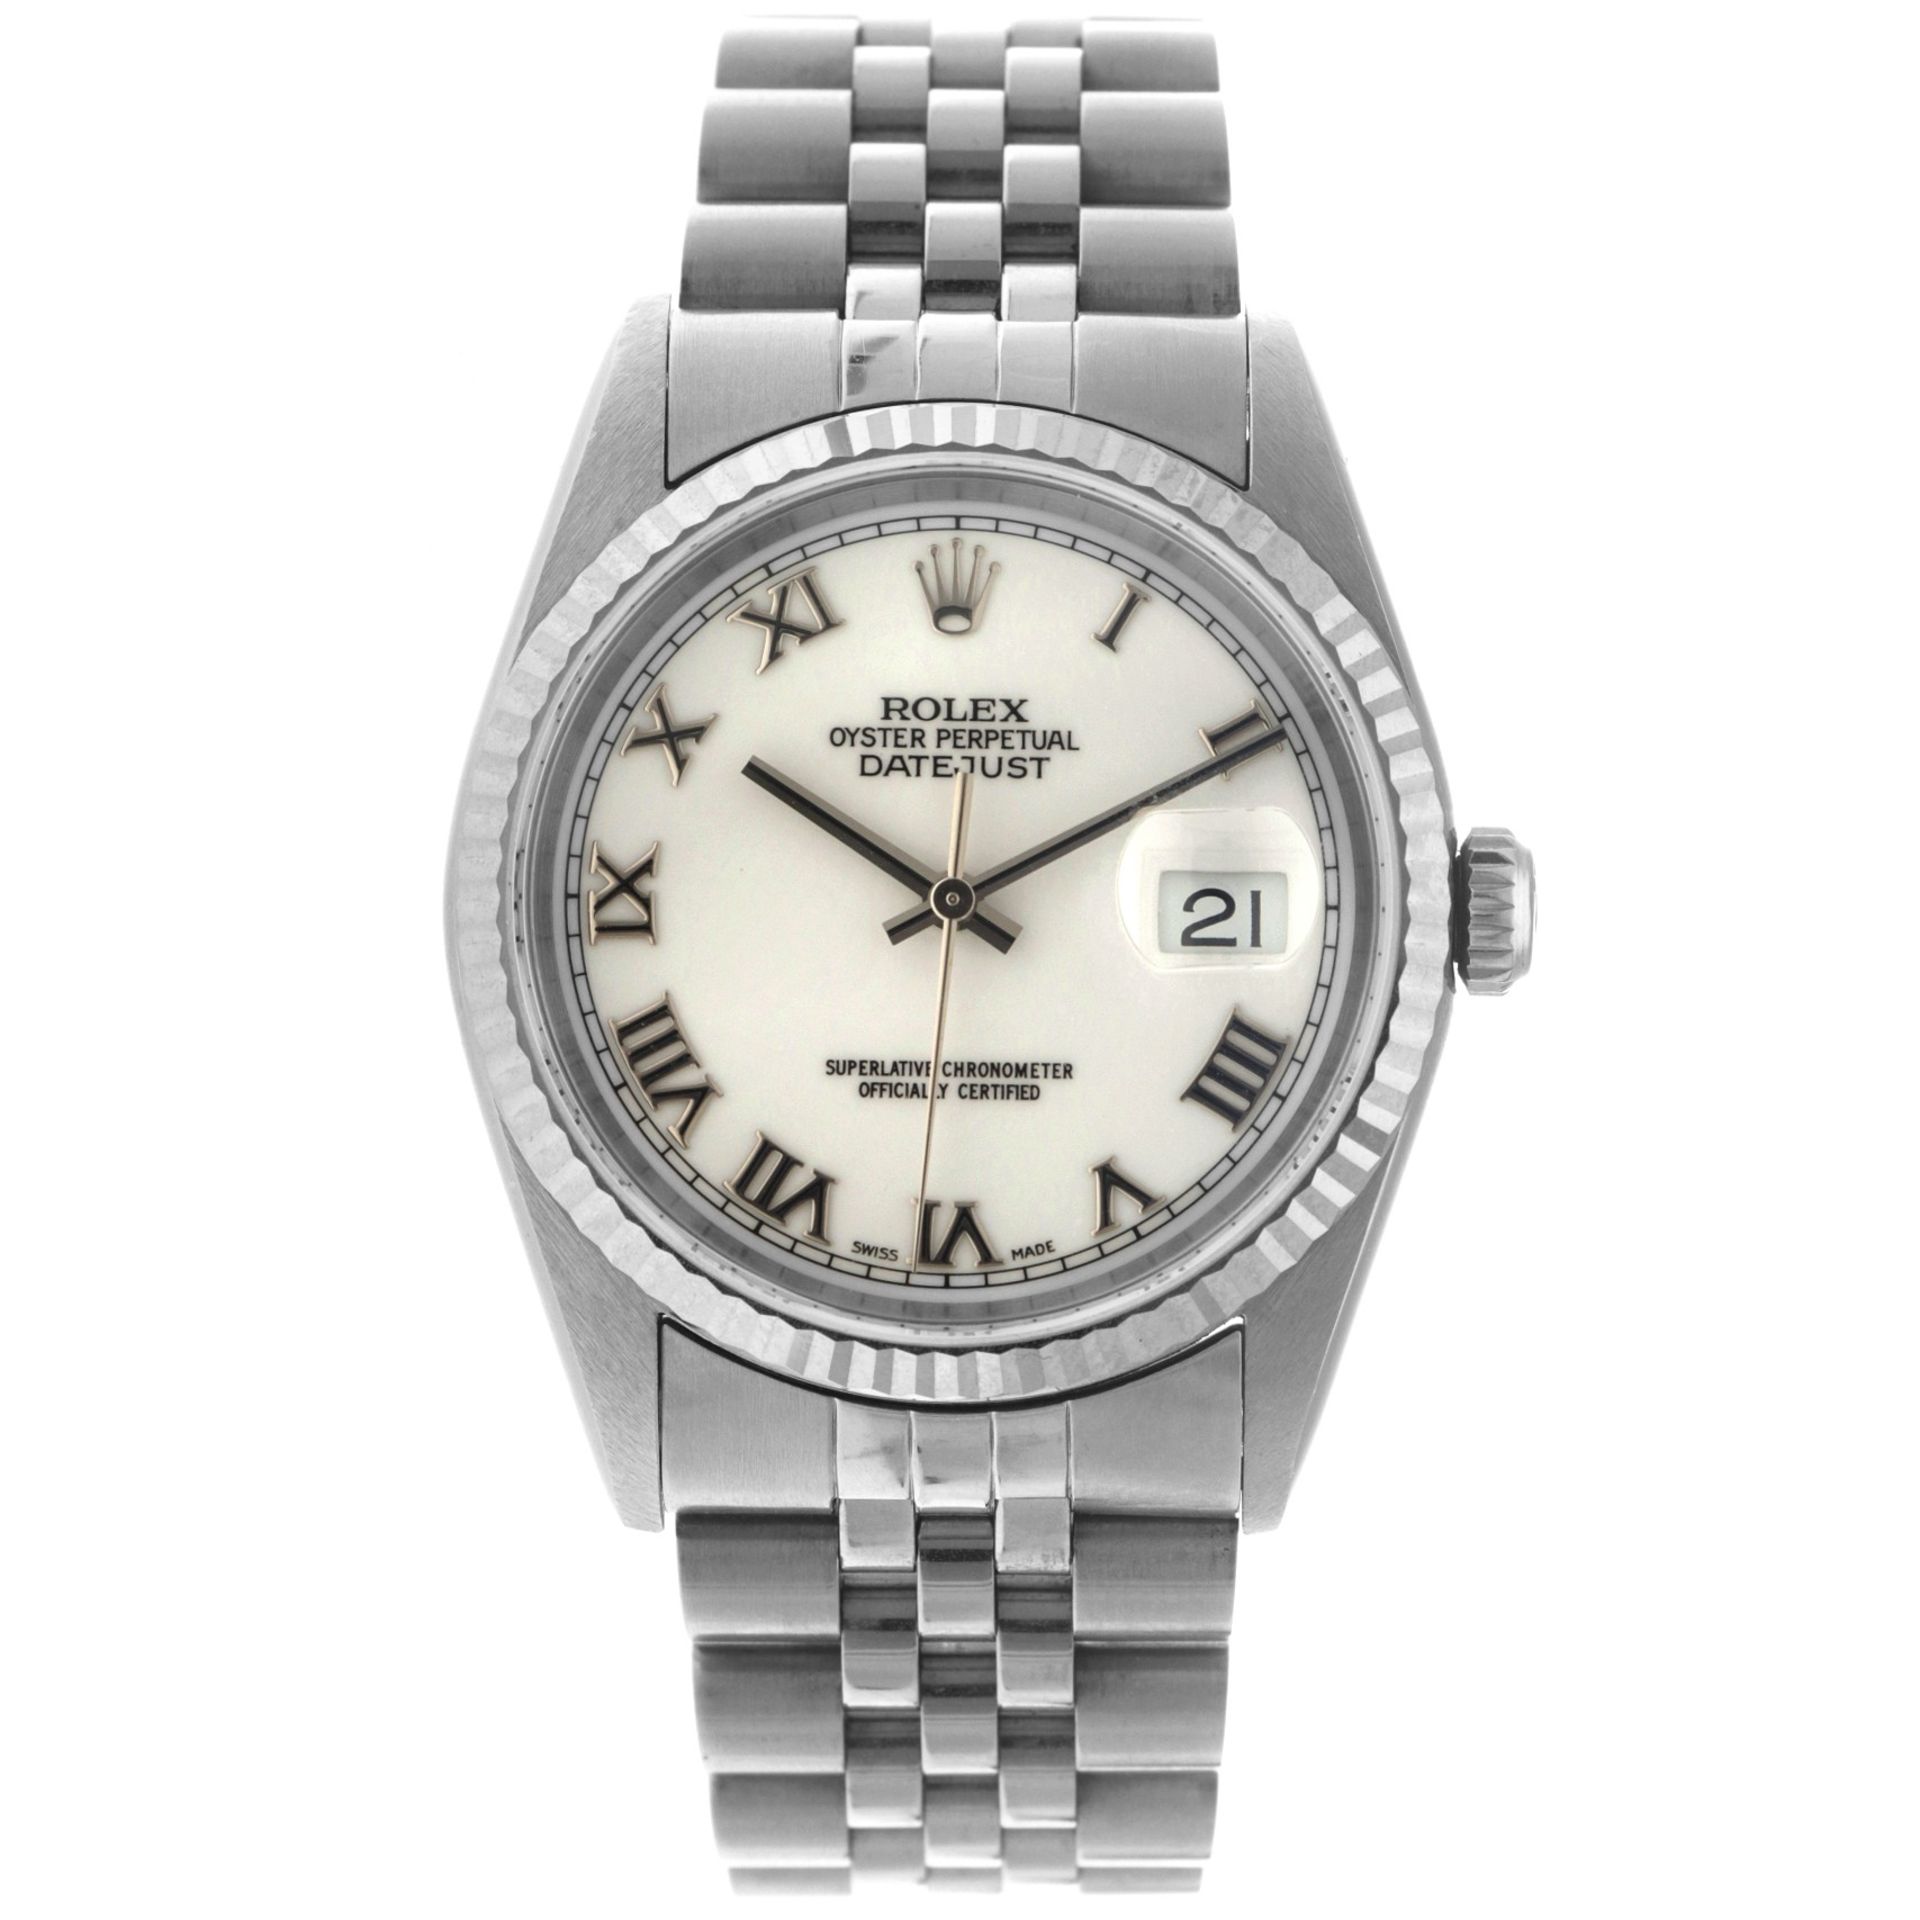 No Reserve - Rolex Datejust 36 16234 - Men's watch - approx. 1997.